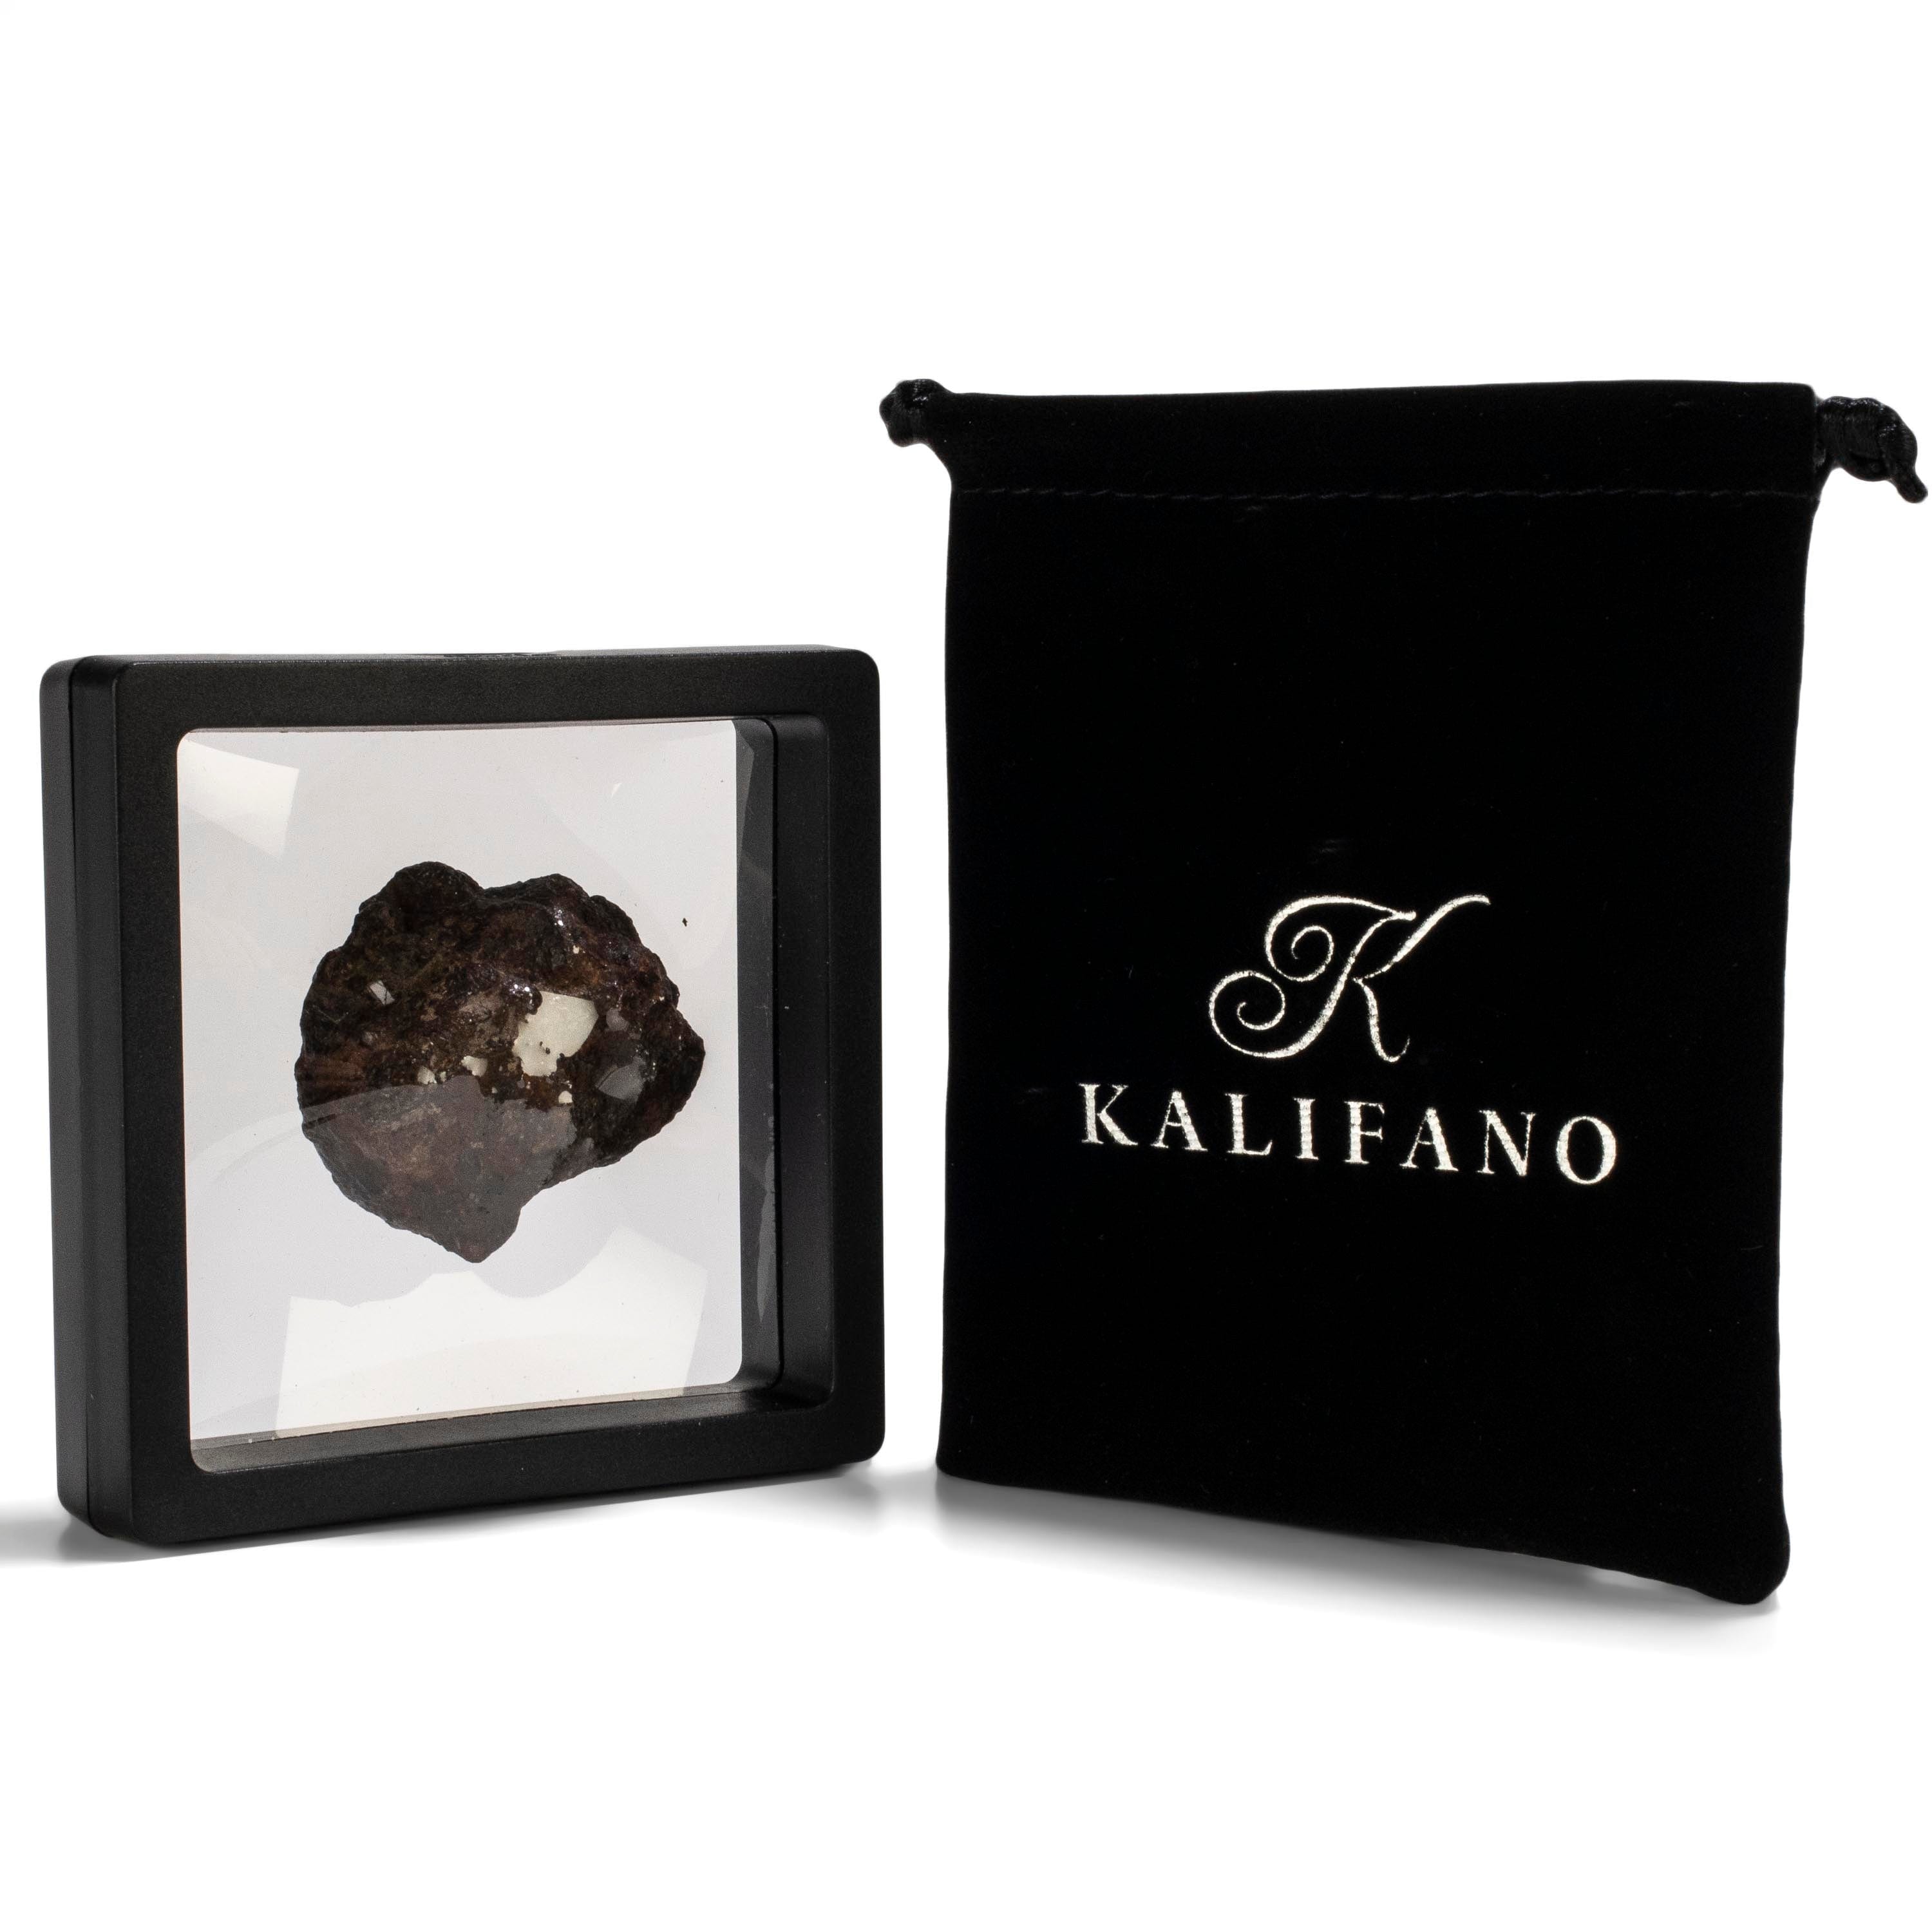 Kalifano Meteorites Sericho Iron Meteorite discovered in Kenya - 113 grams MTCHO2000.001